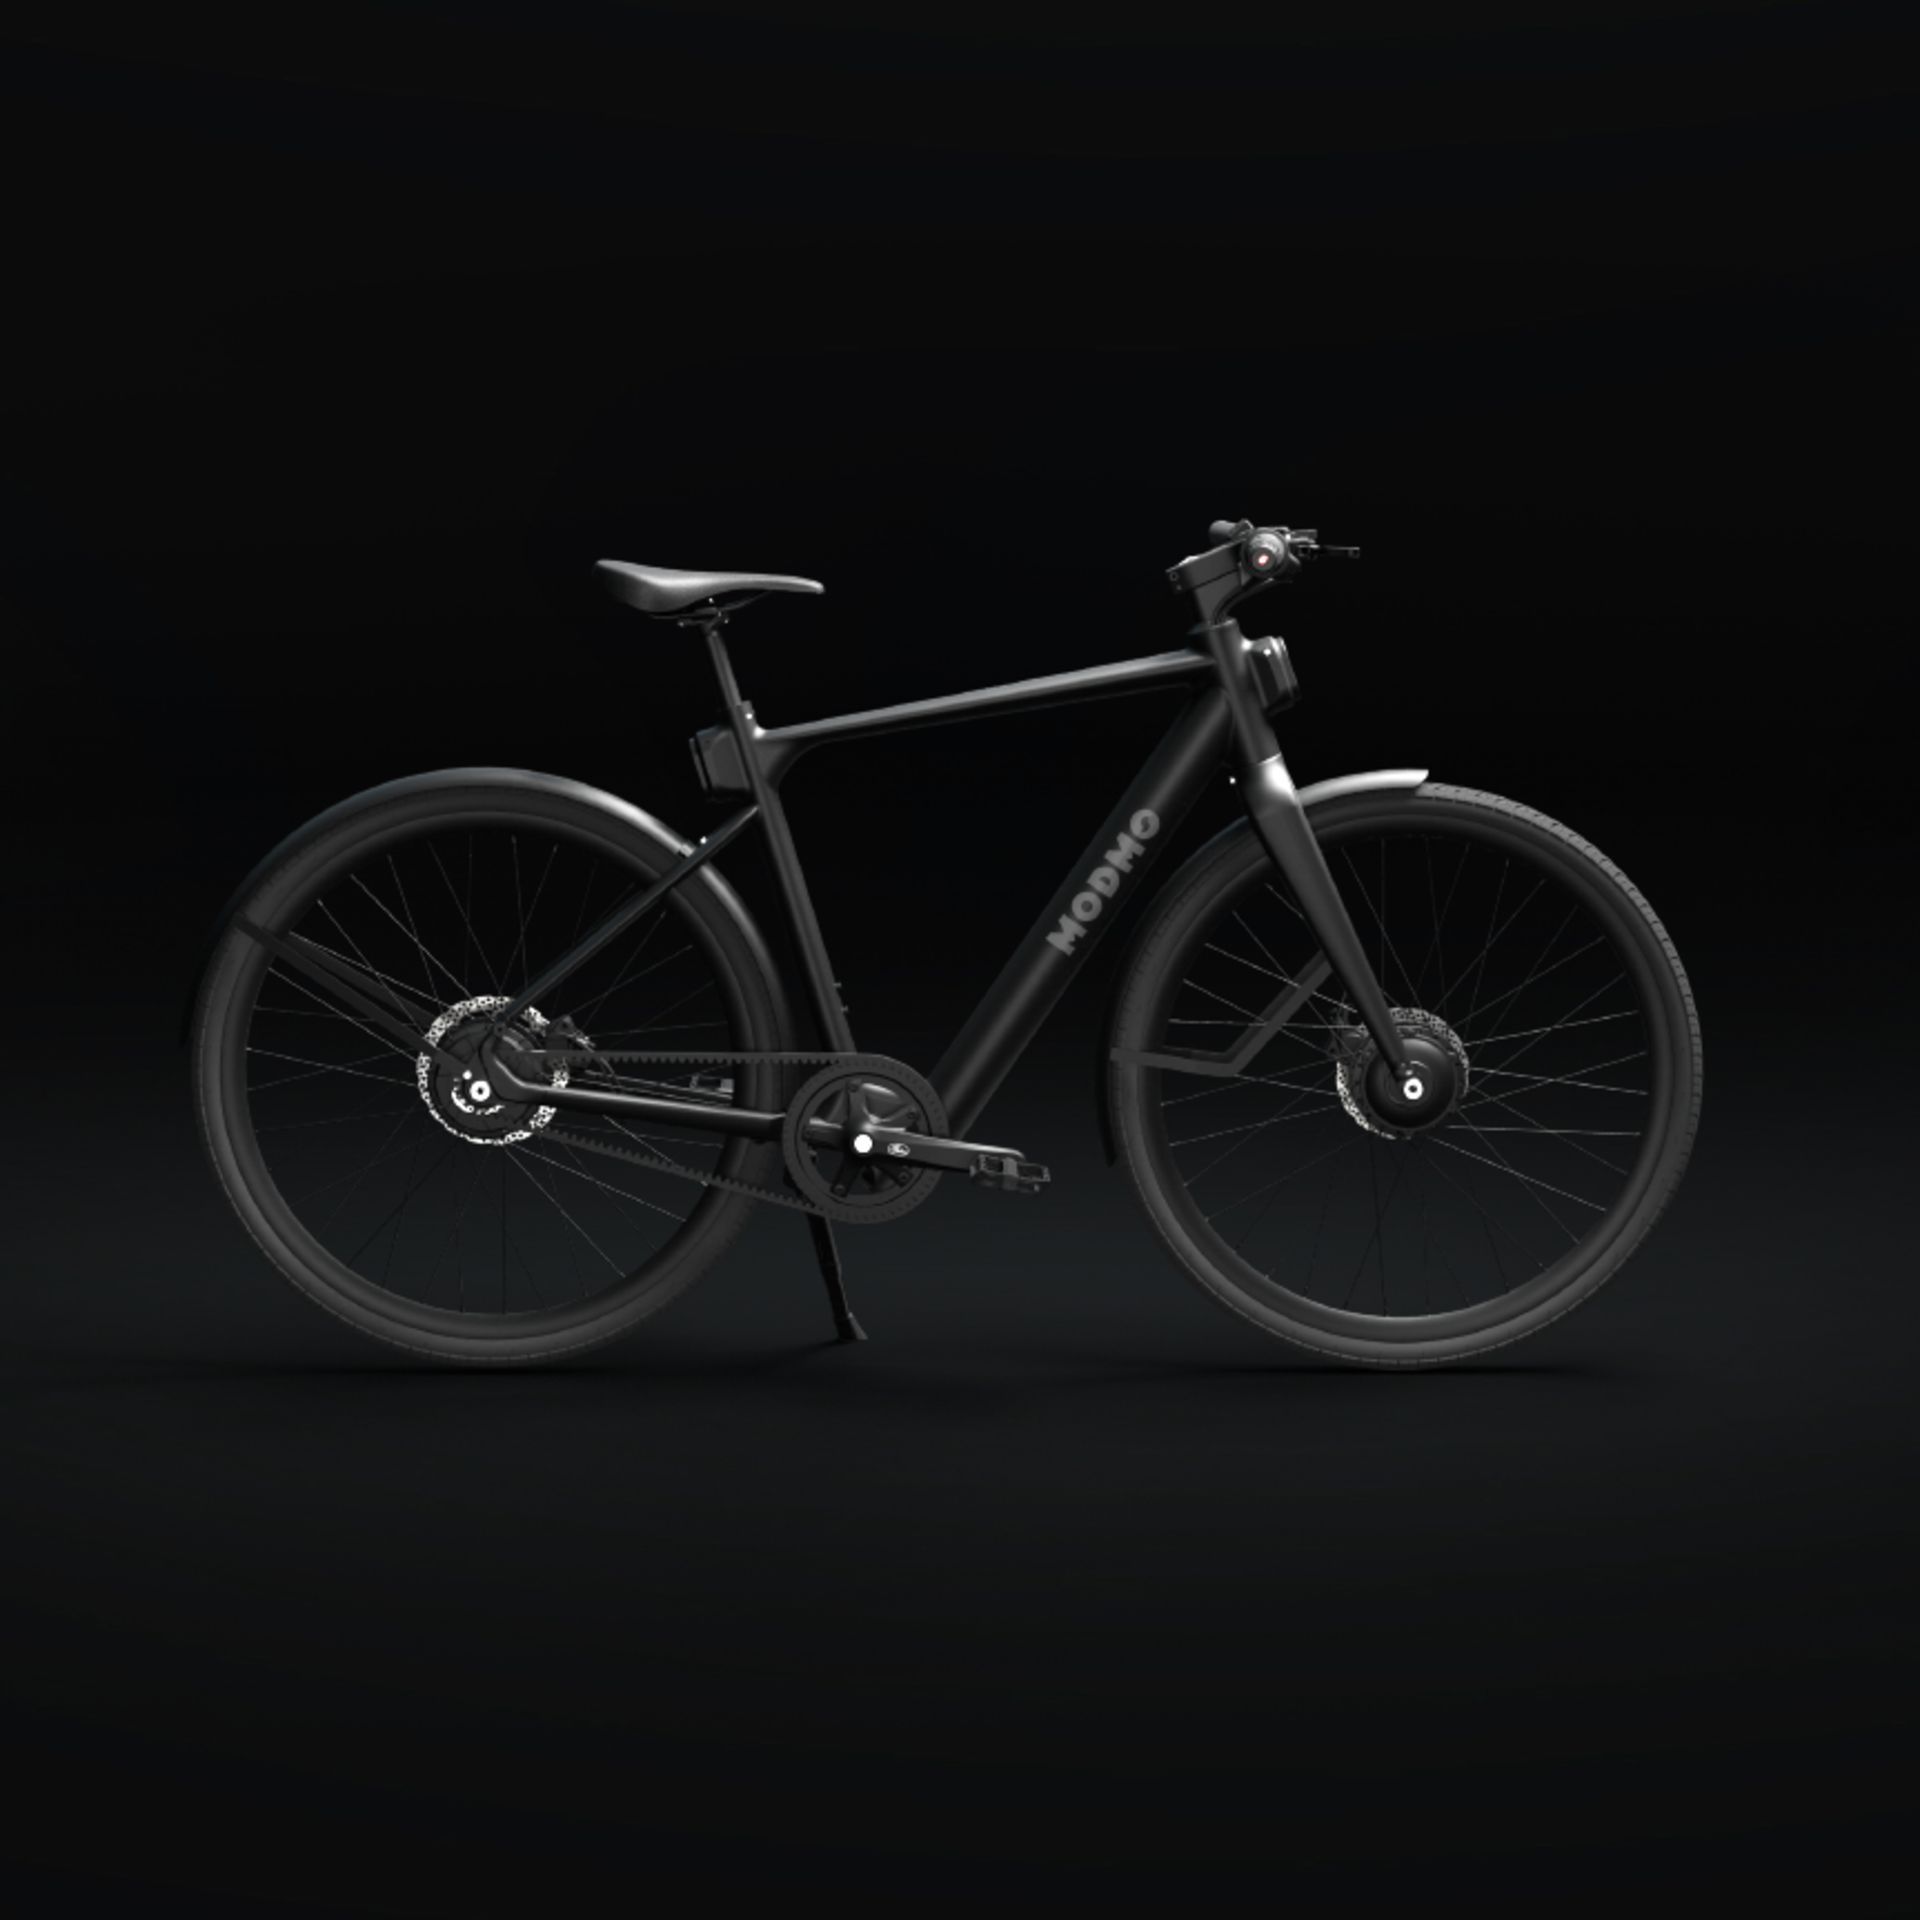 Modmo Saigon+ Electric Bicycle - RRP £2800 - Size S (Rider: 140-155cm) - Image 2 of 14